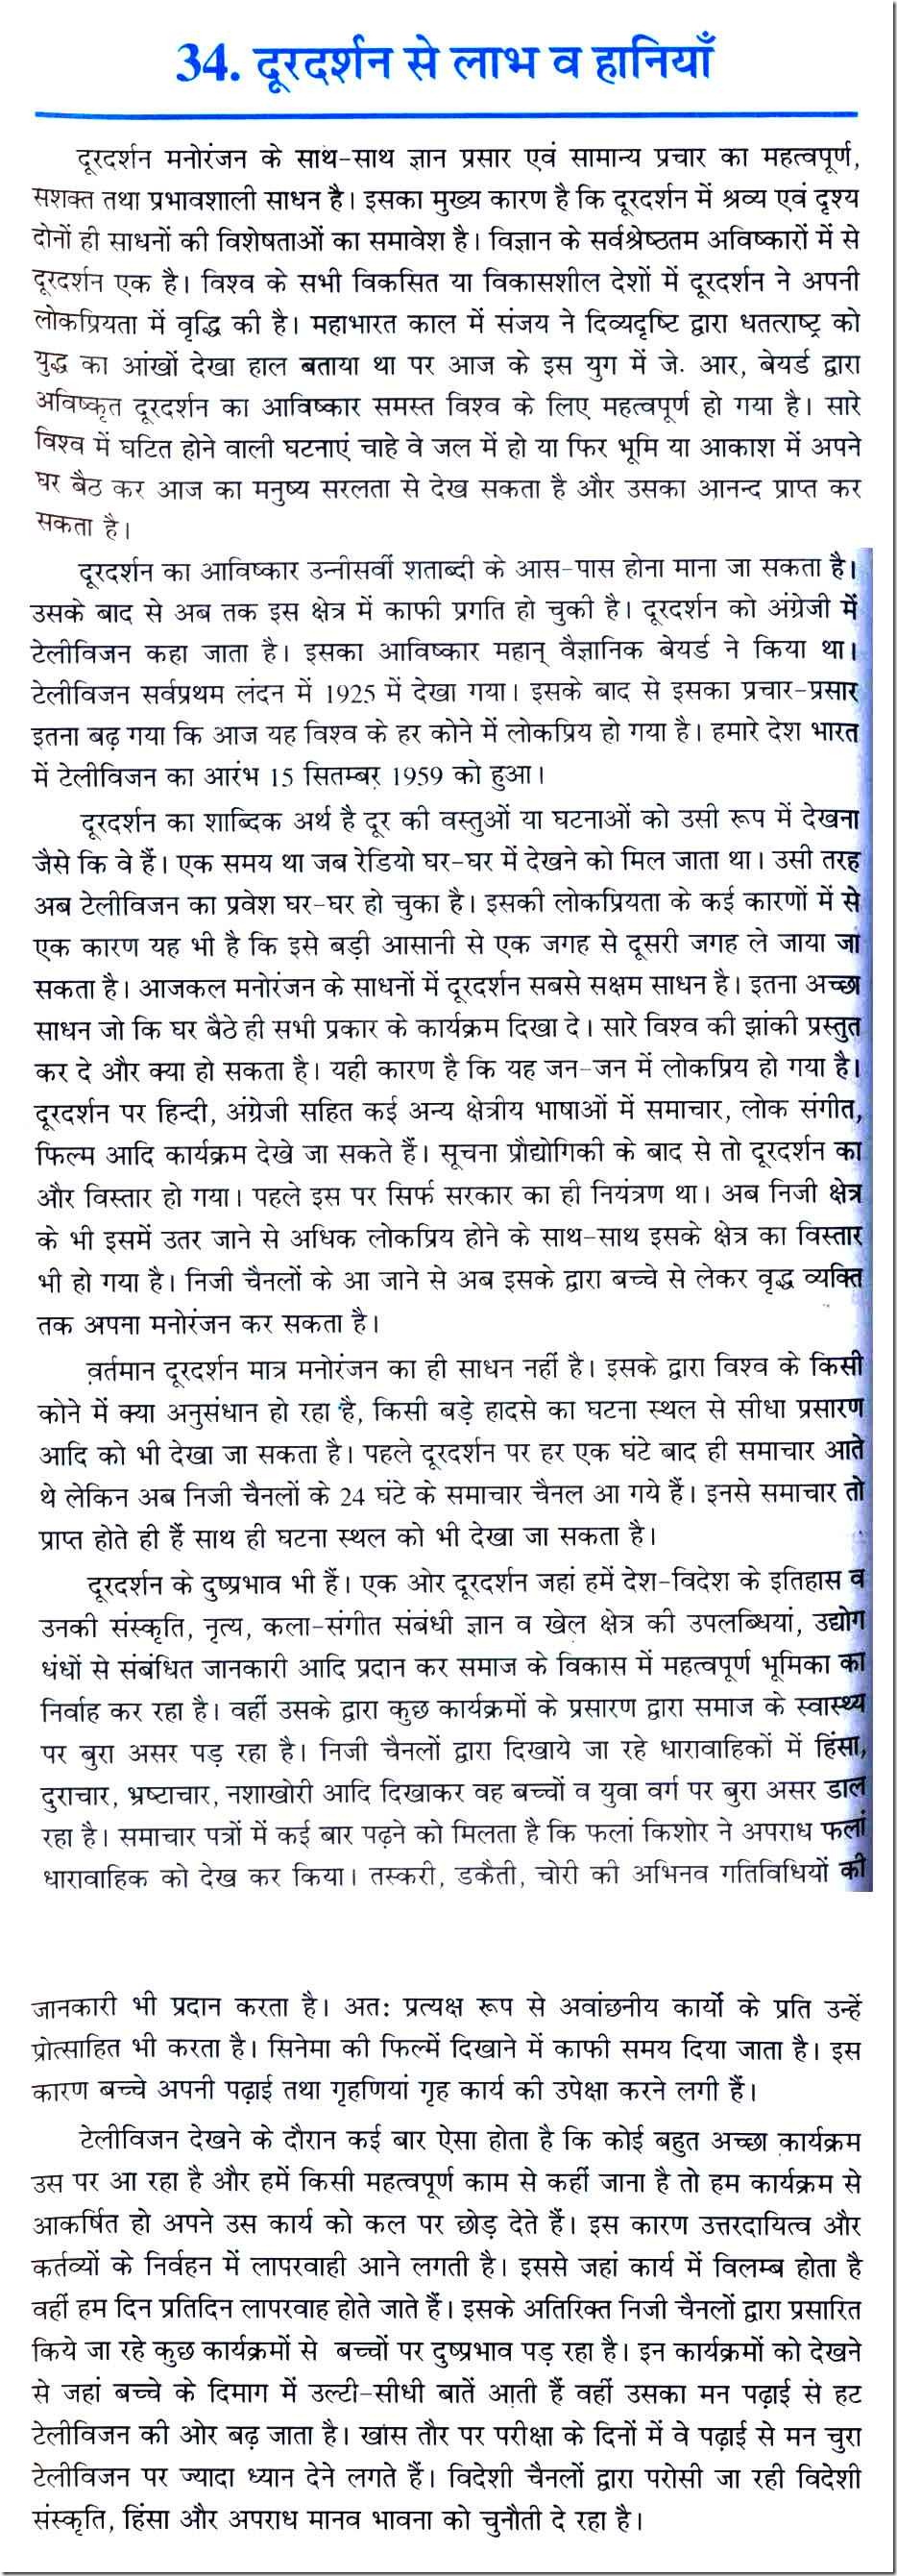 Vatavaran essay in hindi